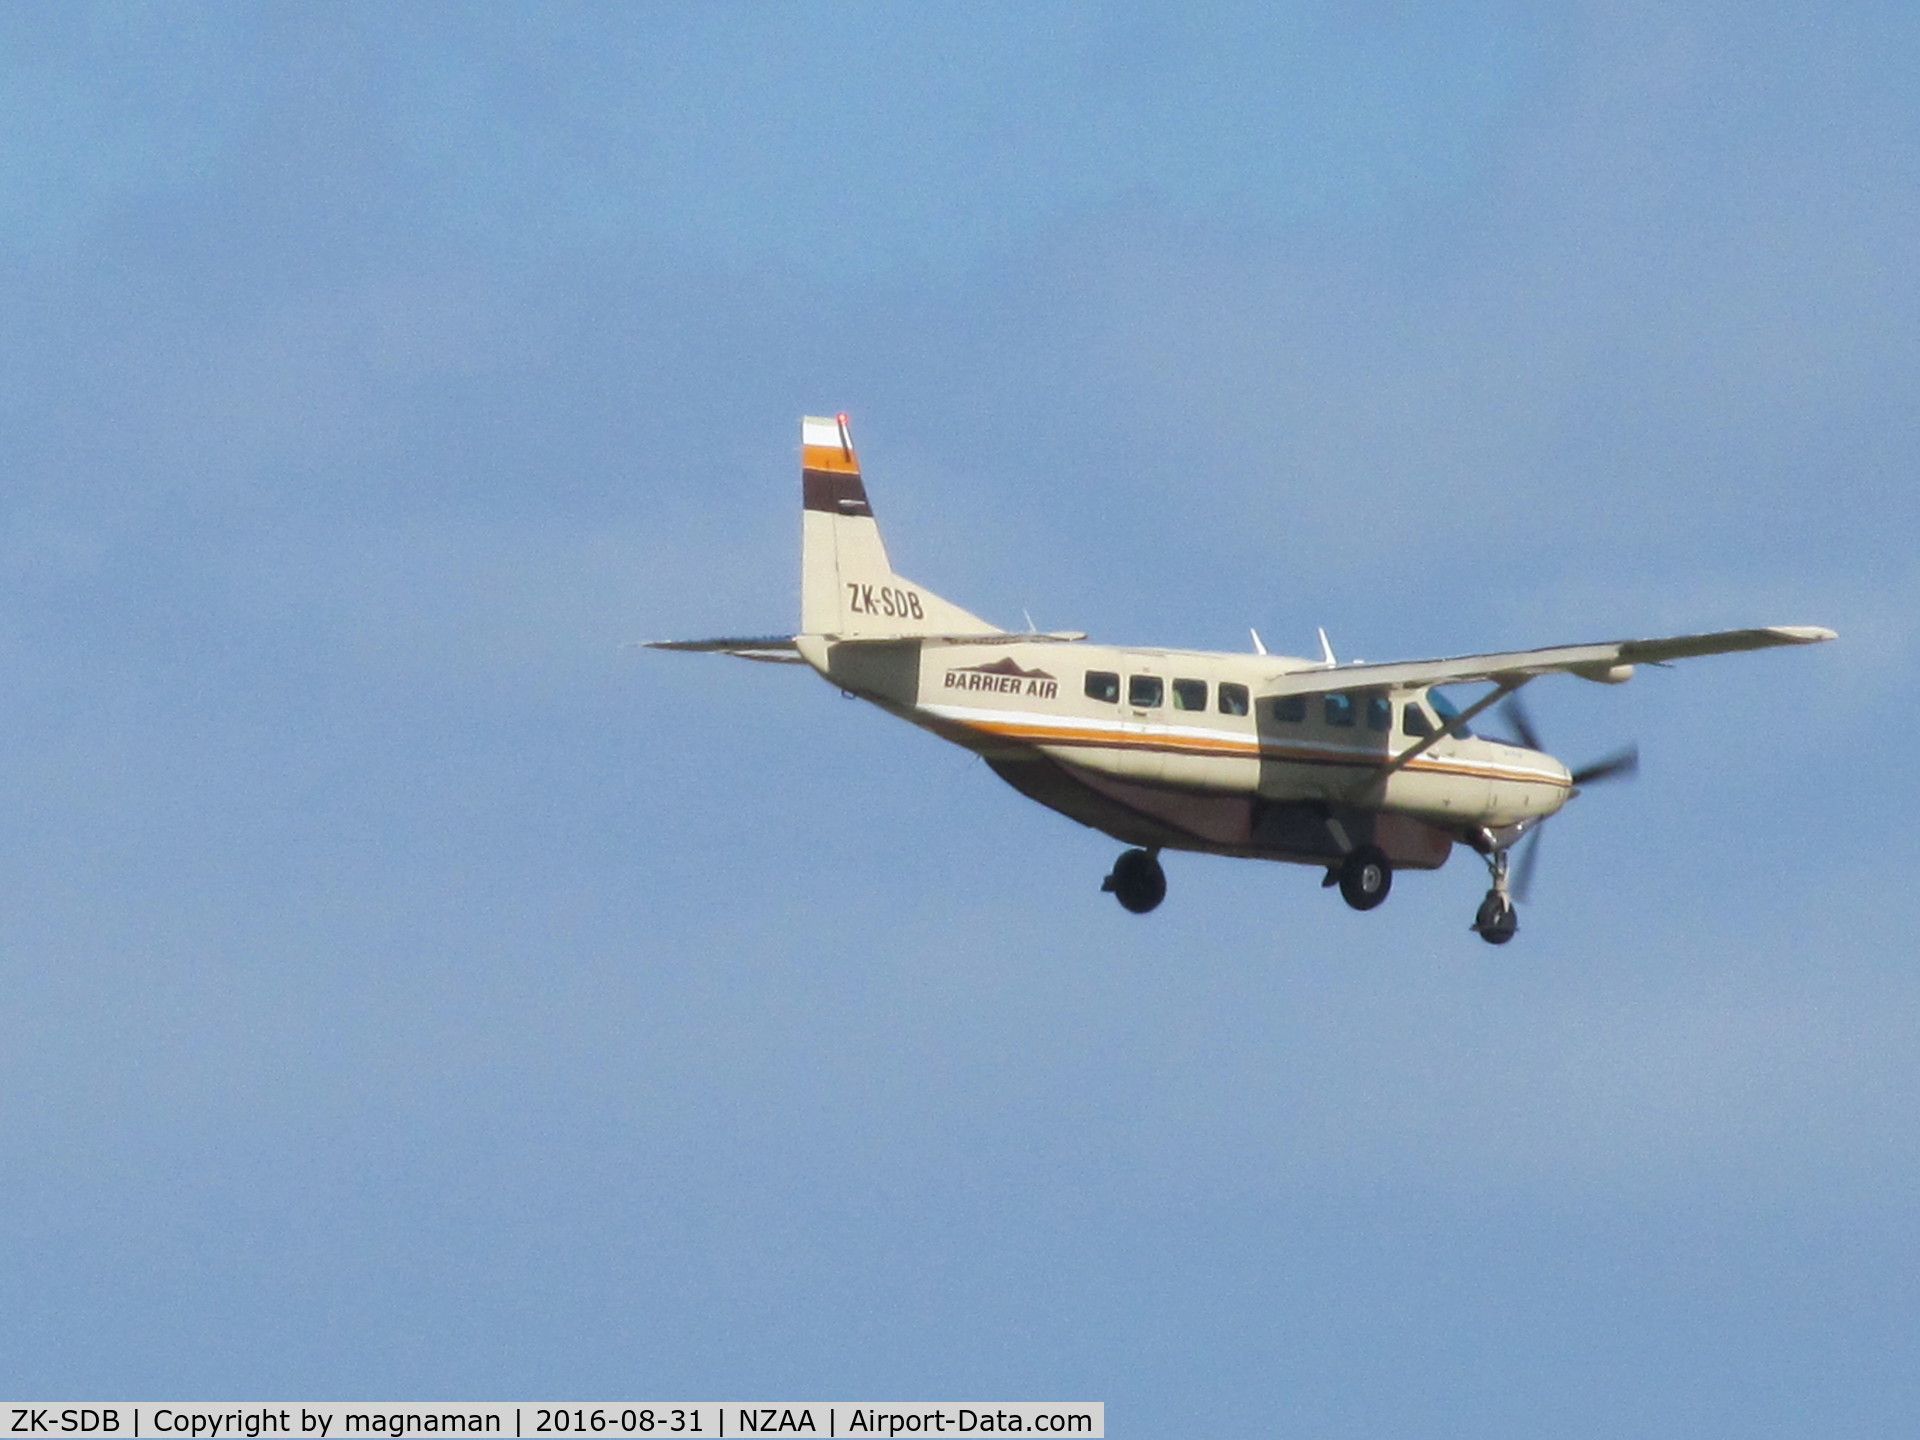 ZK-SDB, 2009 Cessna 208B Grand Caravan C/N 208B2089, on finals - a bit late with photo!